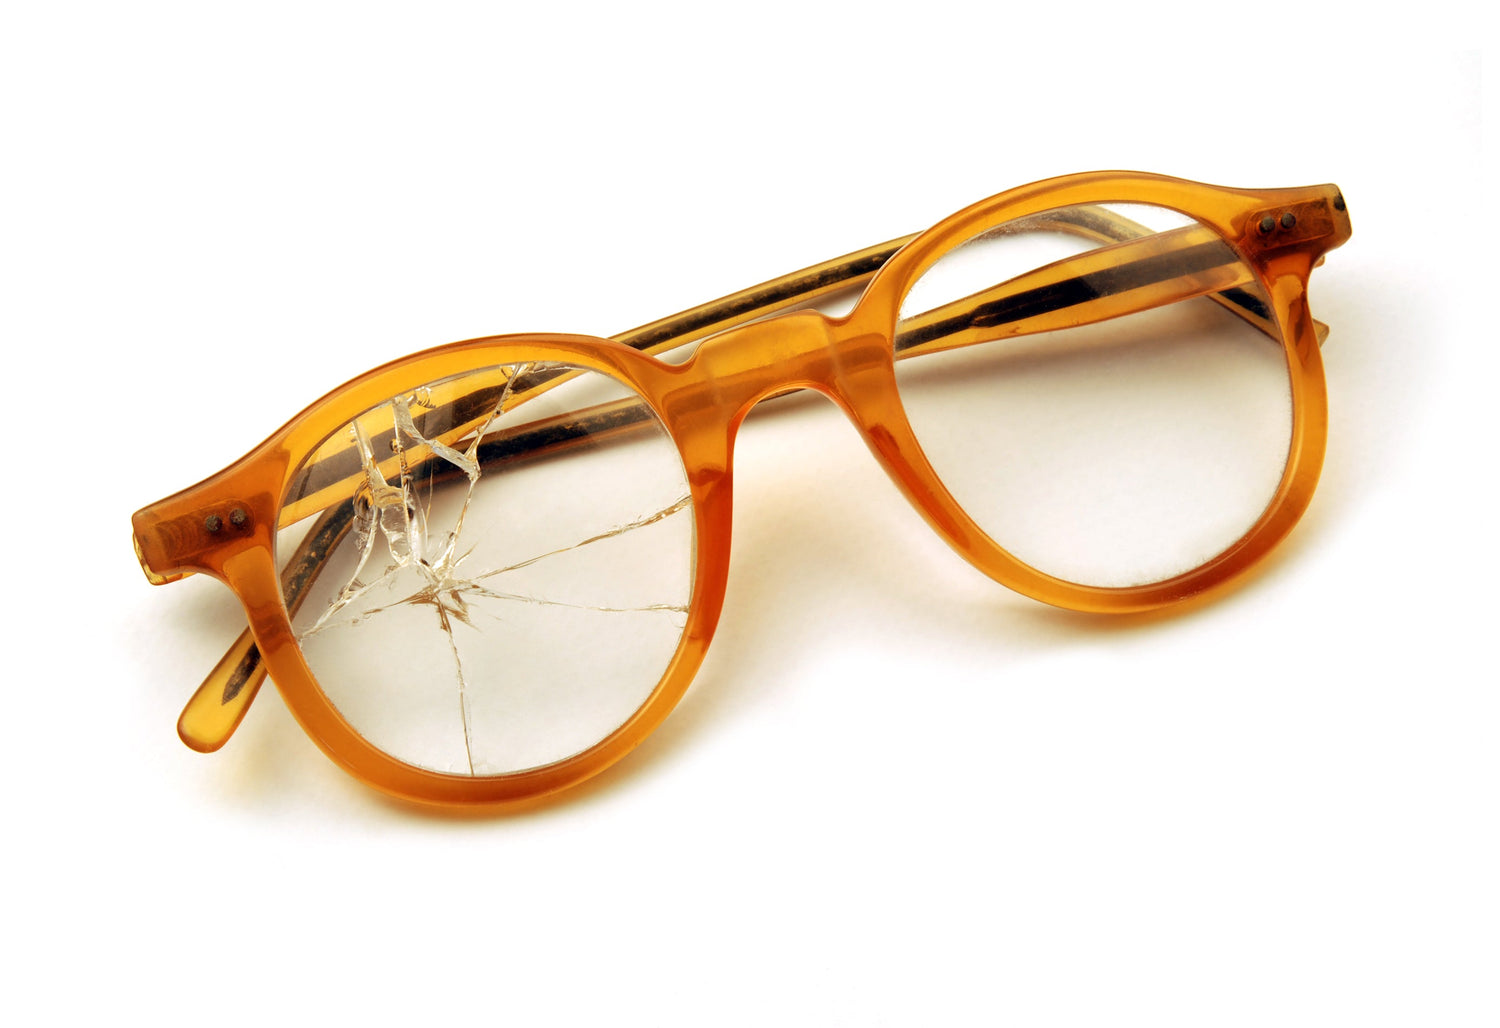 A broken eye glass - An image promoting eyewear protection program